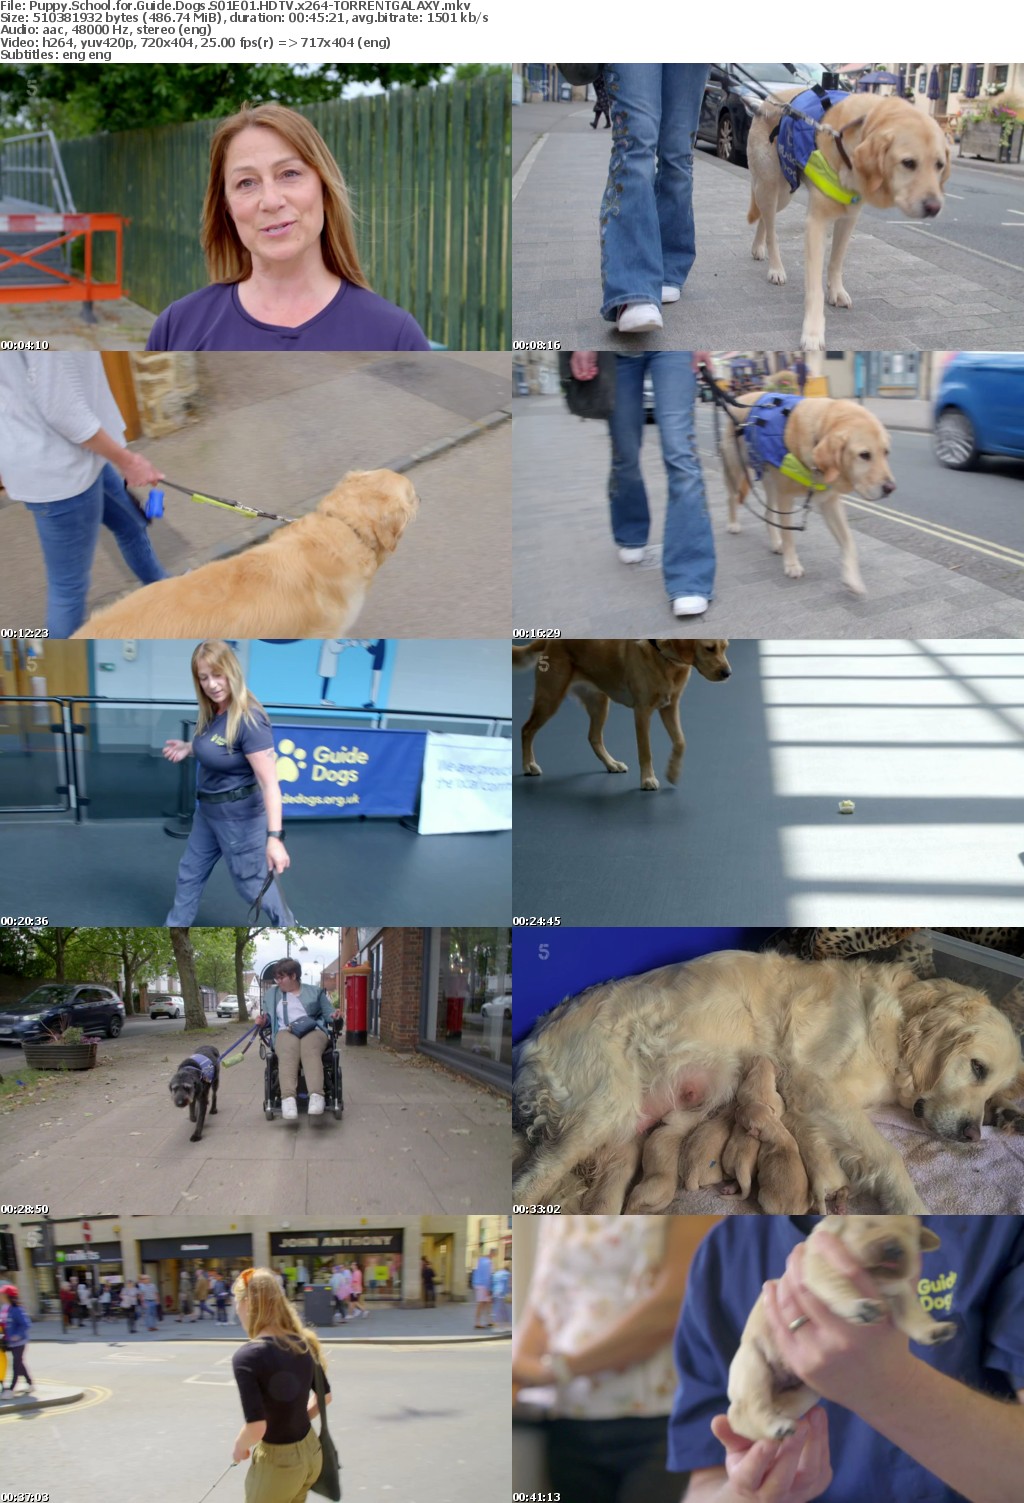 Puppy School for Guide Dogs S01E01 HDTV x264-GALAXY